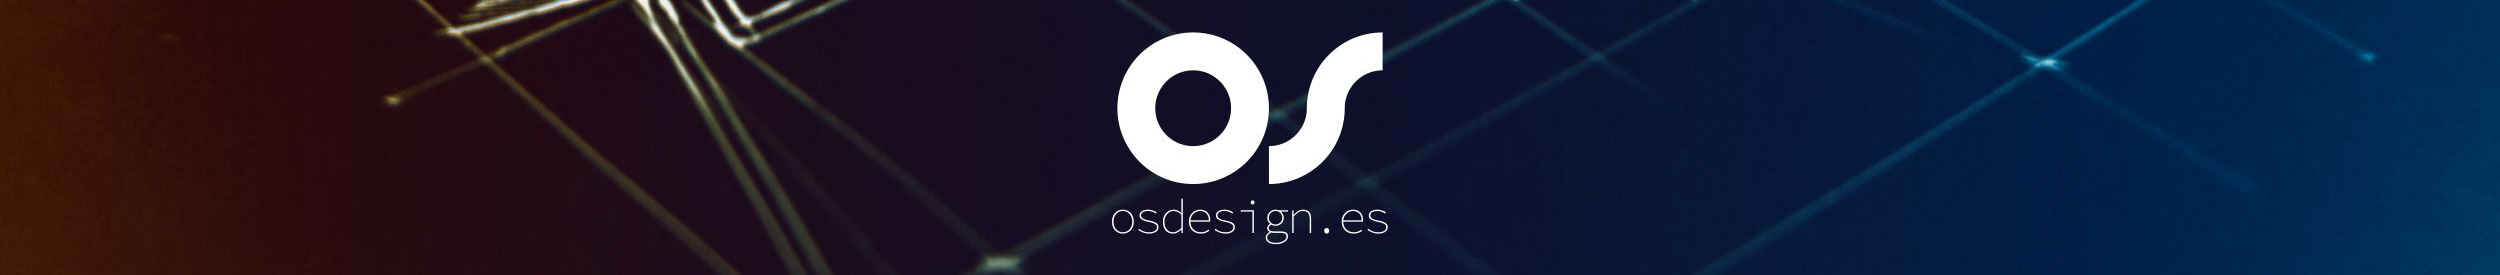 OS Design's profile banner